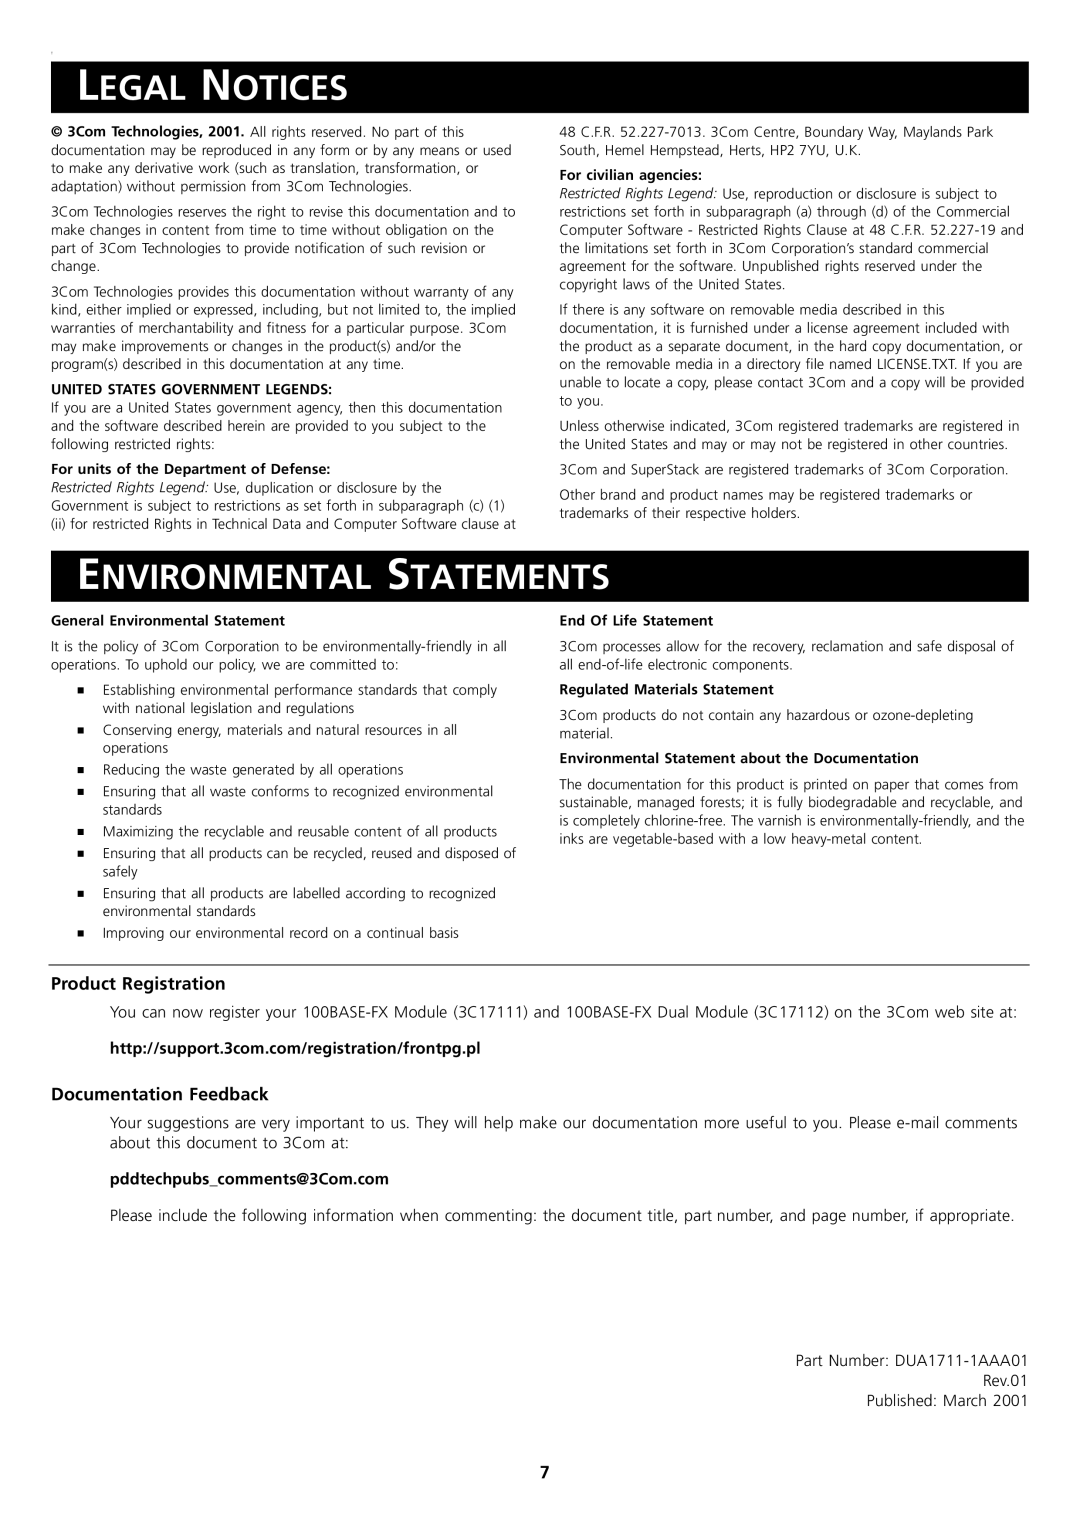 3Com DUA1711-1AAA01 manual Legal Notices, Environmental Statements, Product Registration, Documentation Feedback 